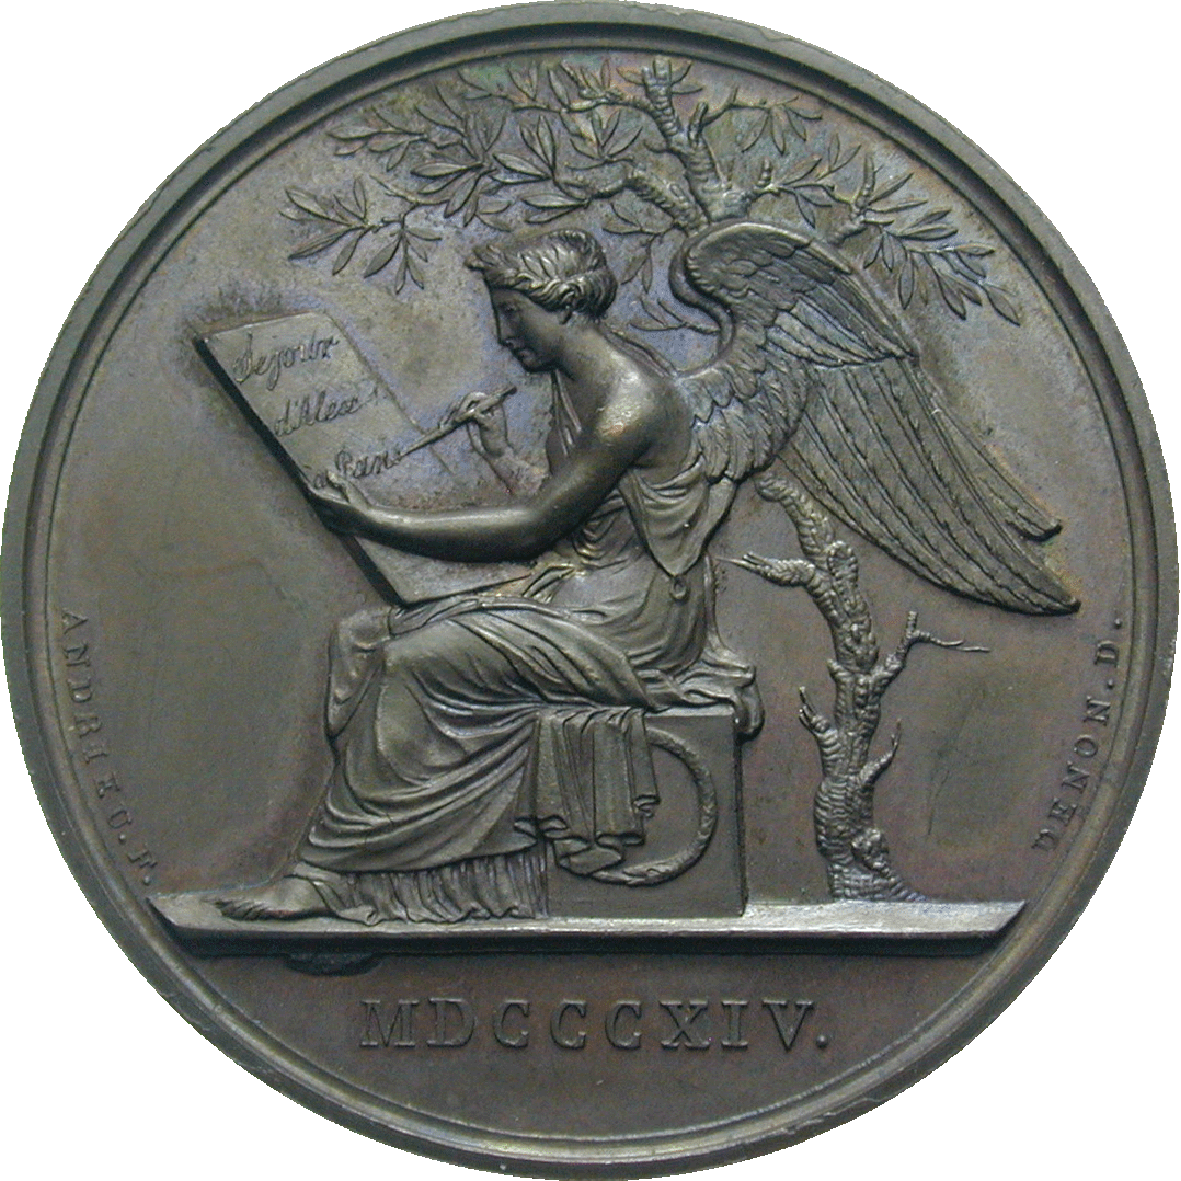 Zarenreich Russland, Alexander I., Medaille 1814 (reverse)